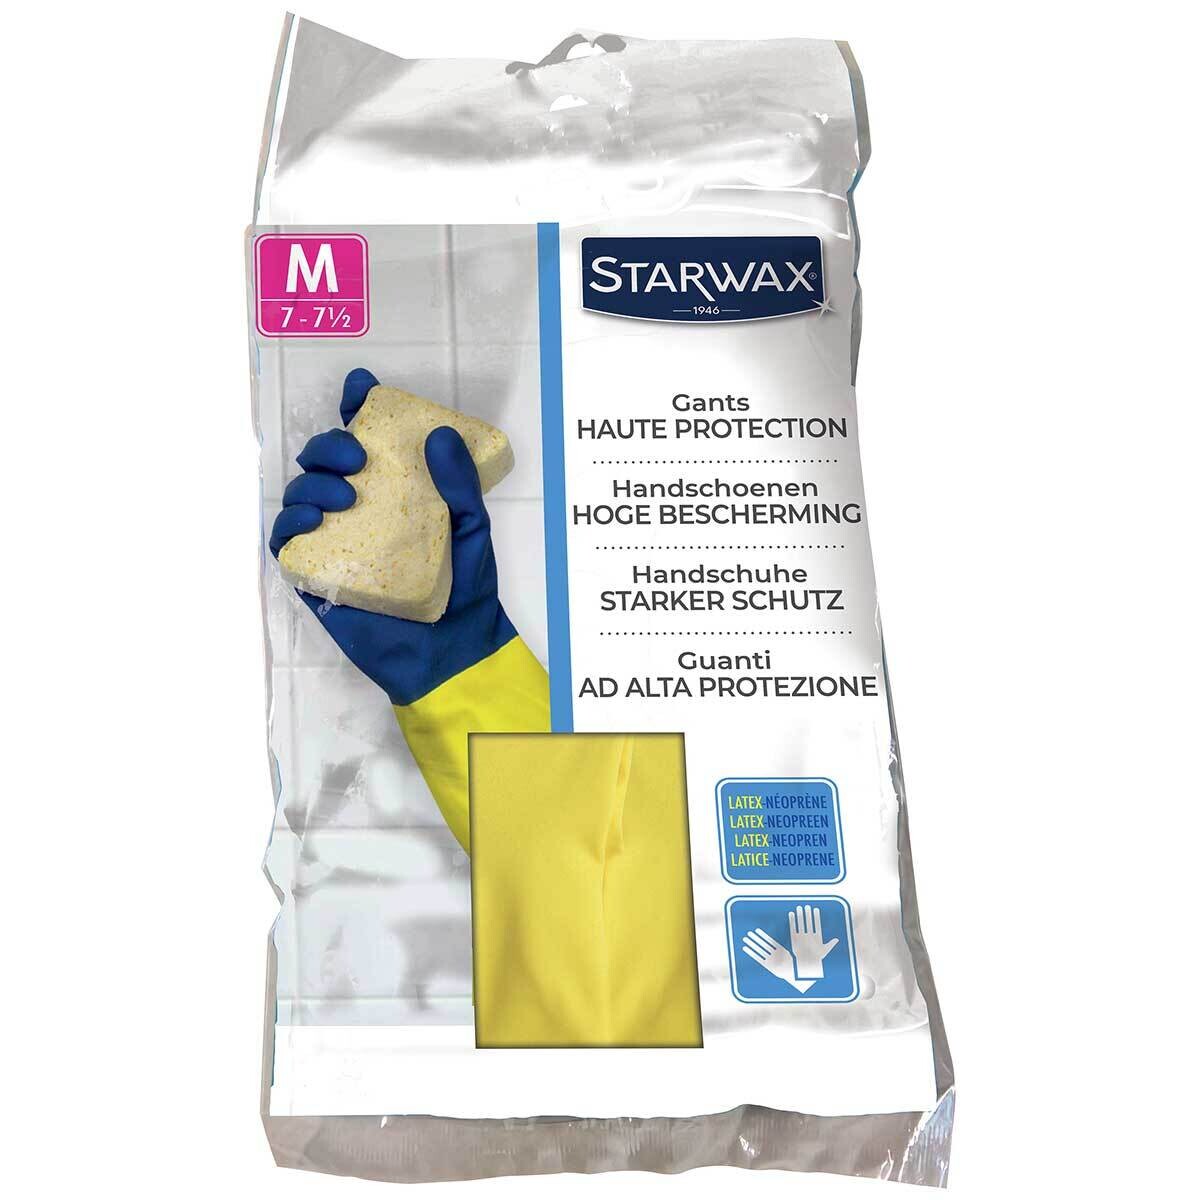 Starwax gants de ménage protection 'M' - 1 pair